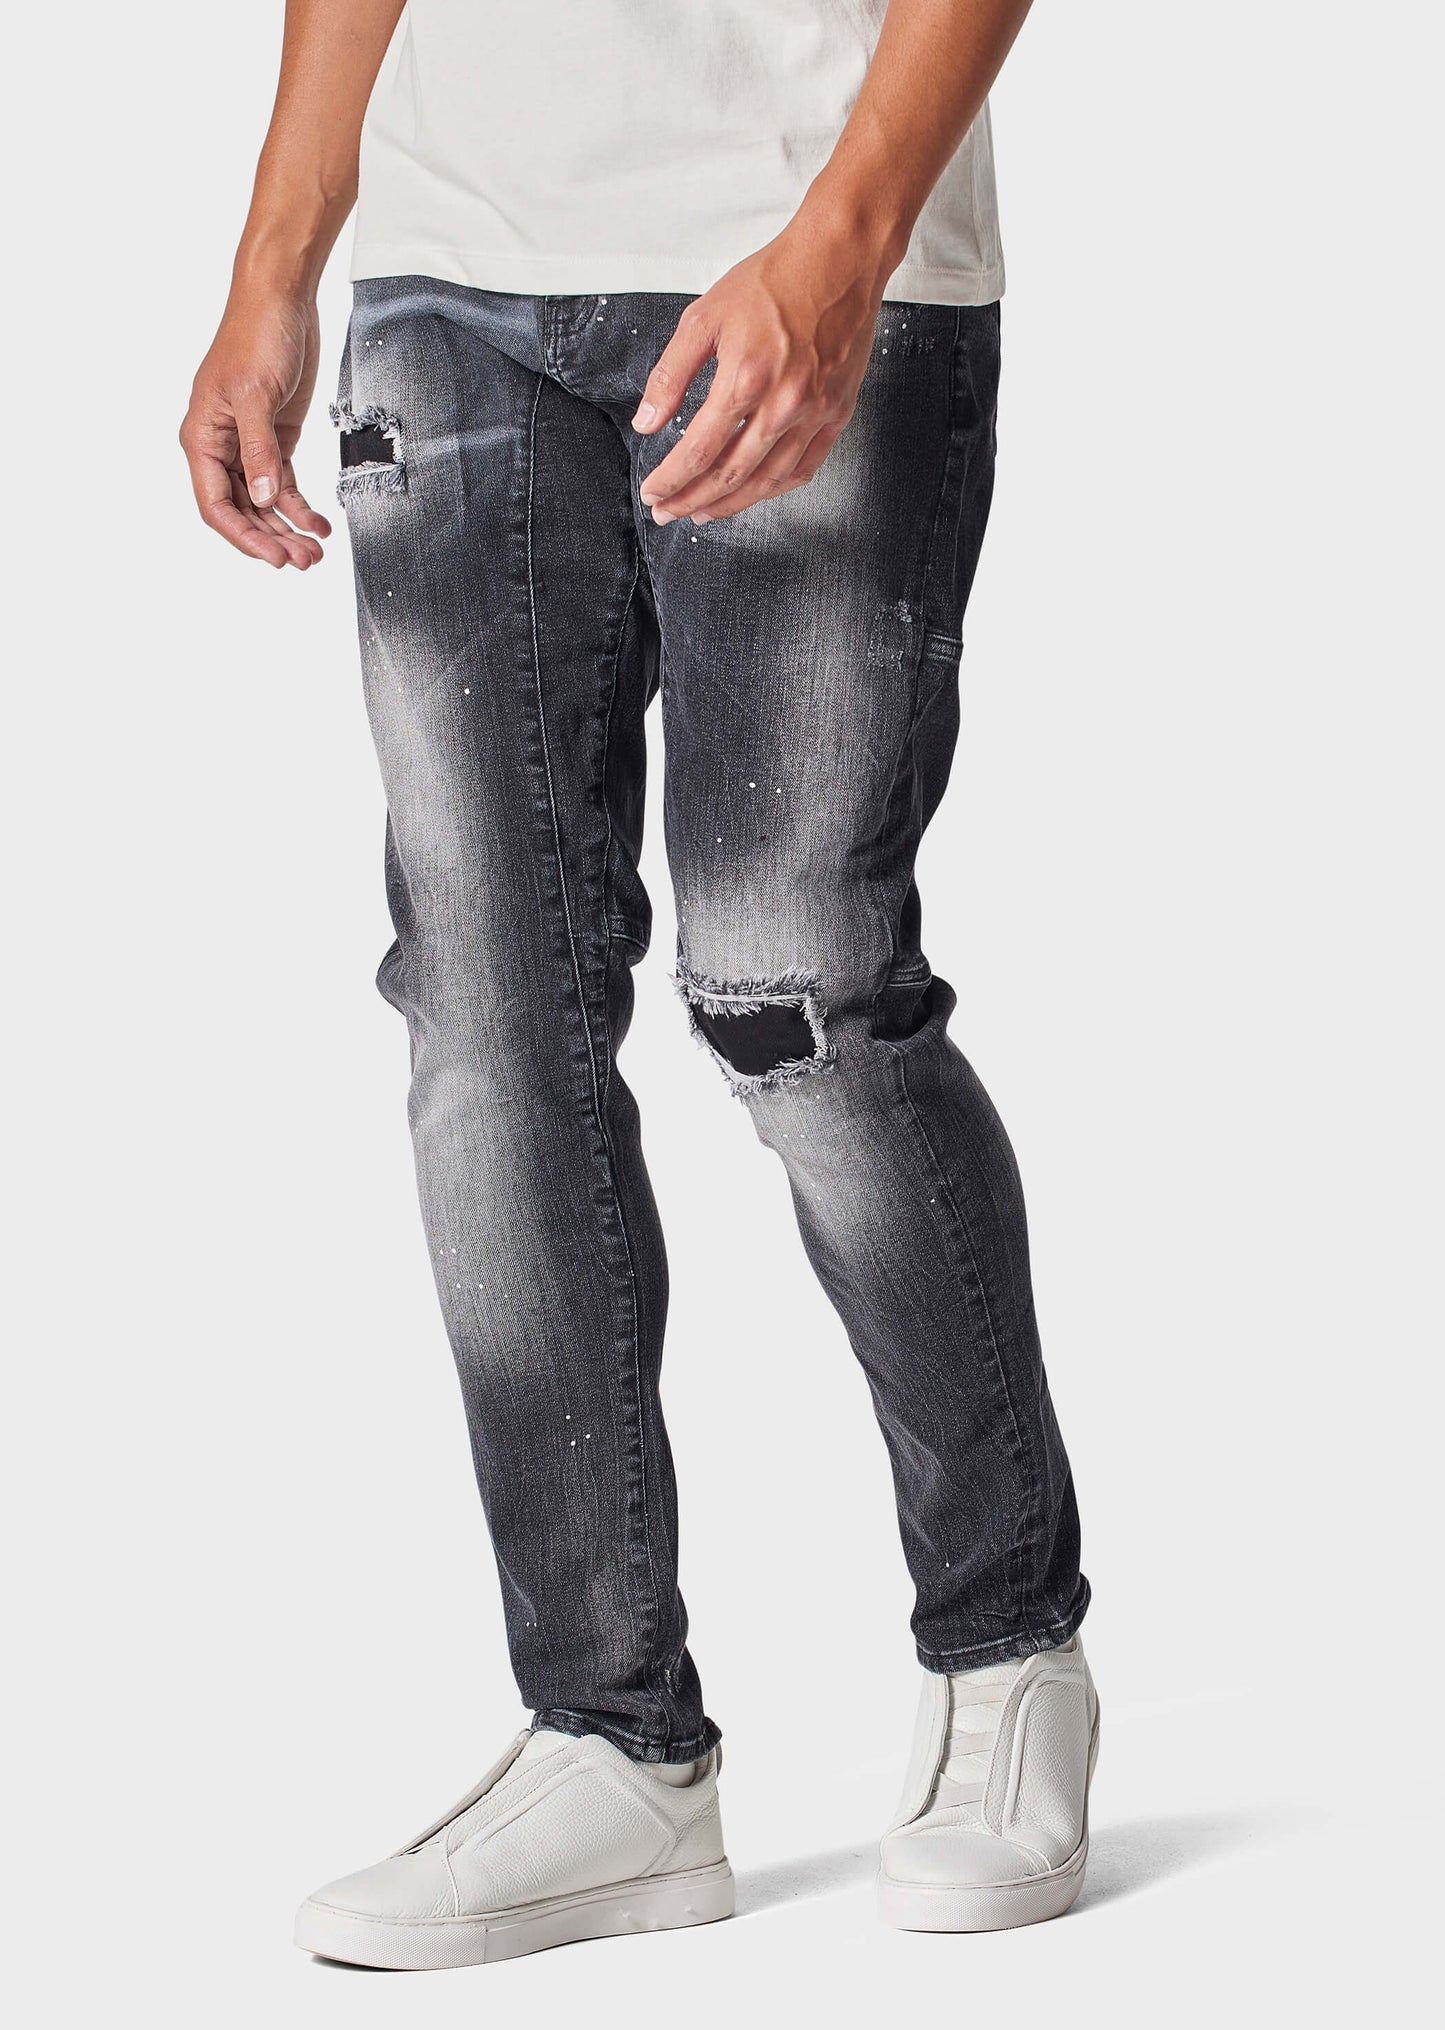 Moriarty ZAK 875 Slim Fit Jeans